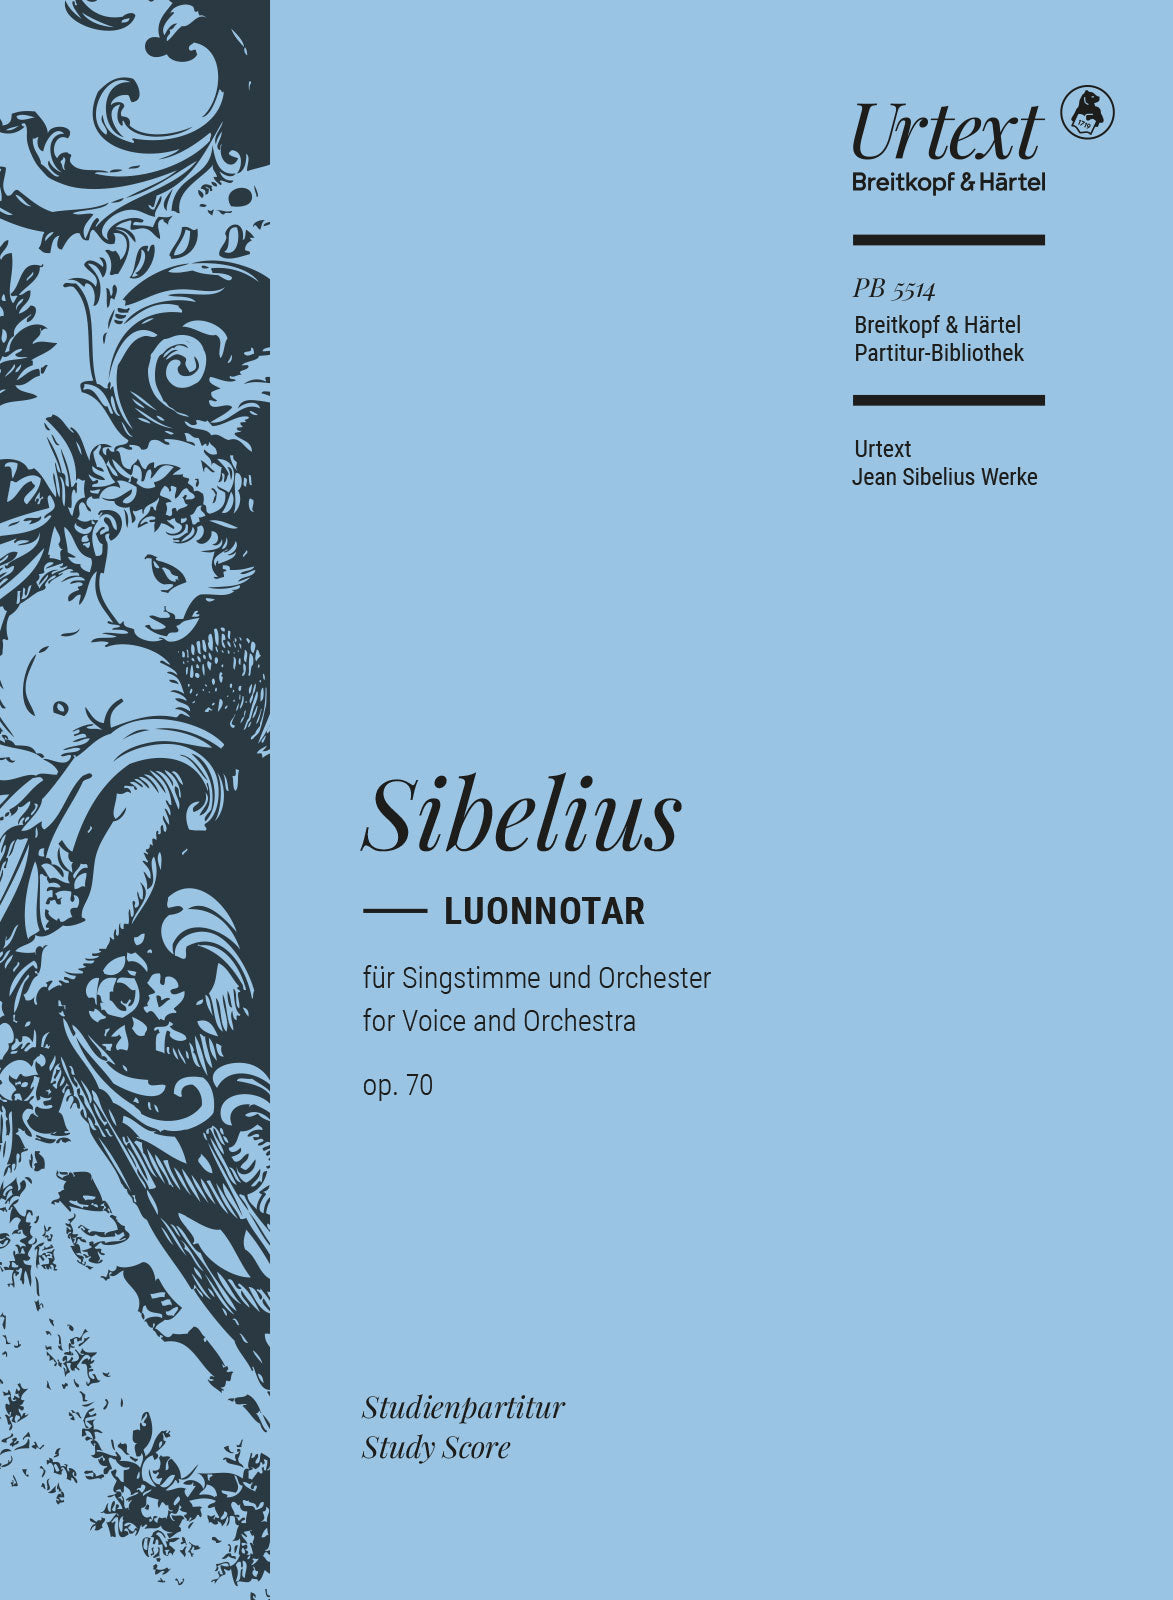 Sibelius Luonnatar Study